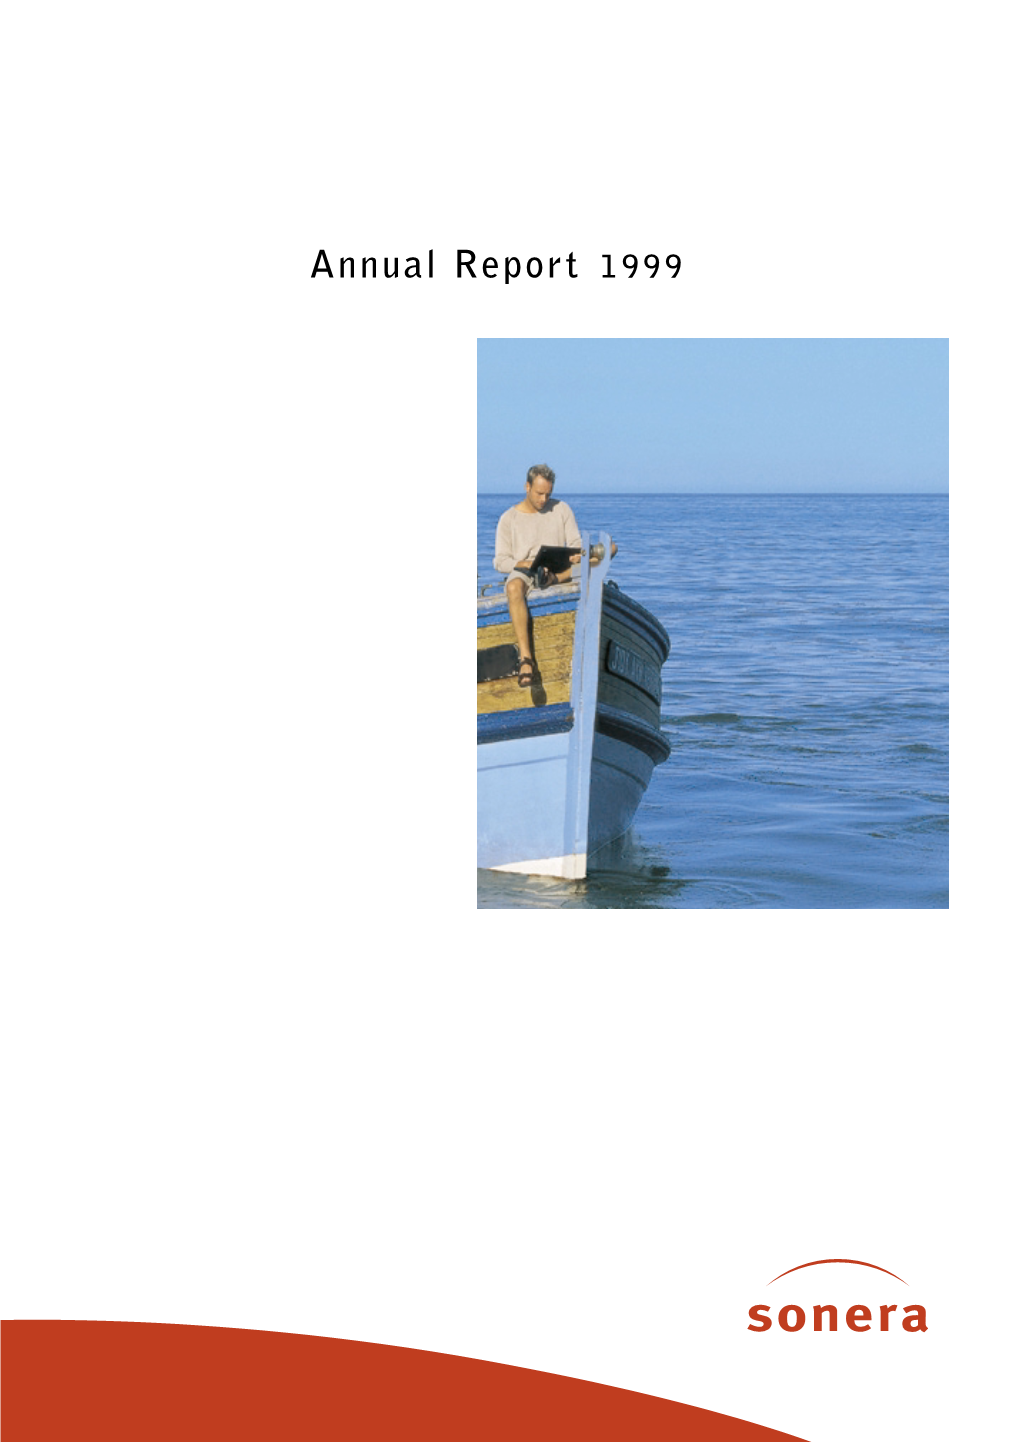 SONERA ANNUAL REPORT 1999 Group Key Figures